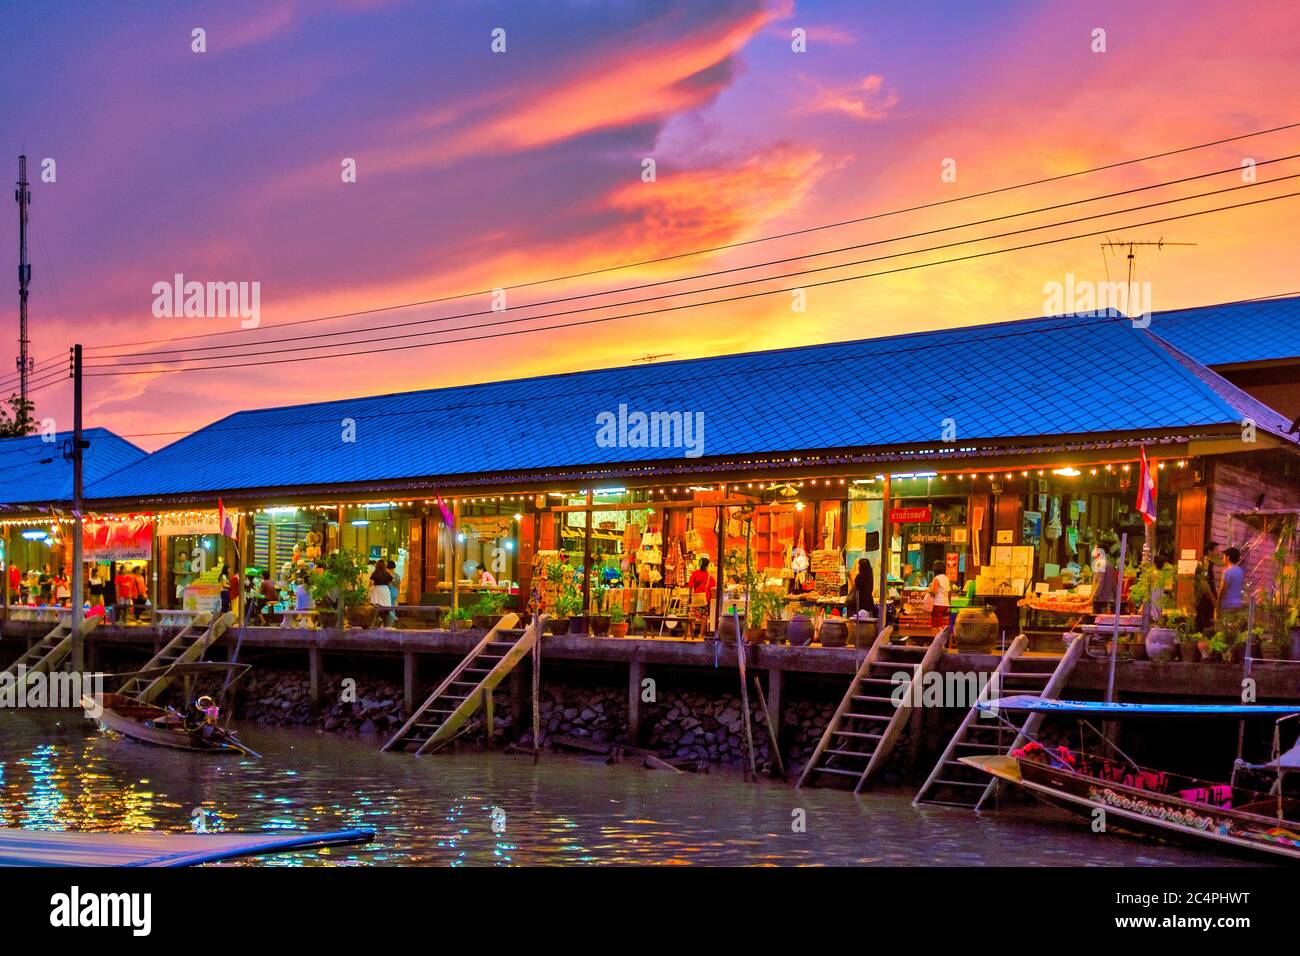 Amphawa floating market at sunset, Amphawa, Thailand Stock Photo